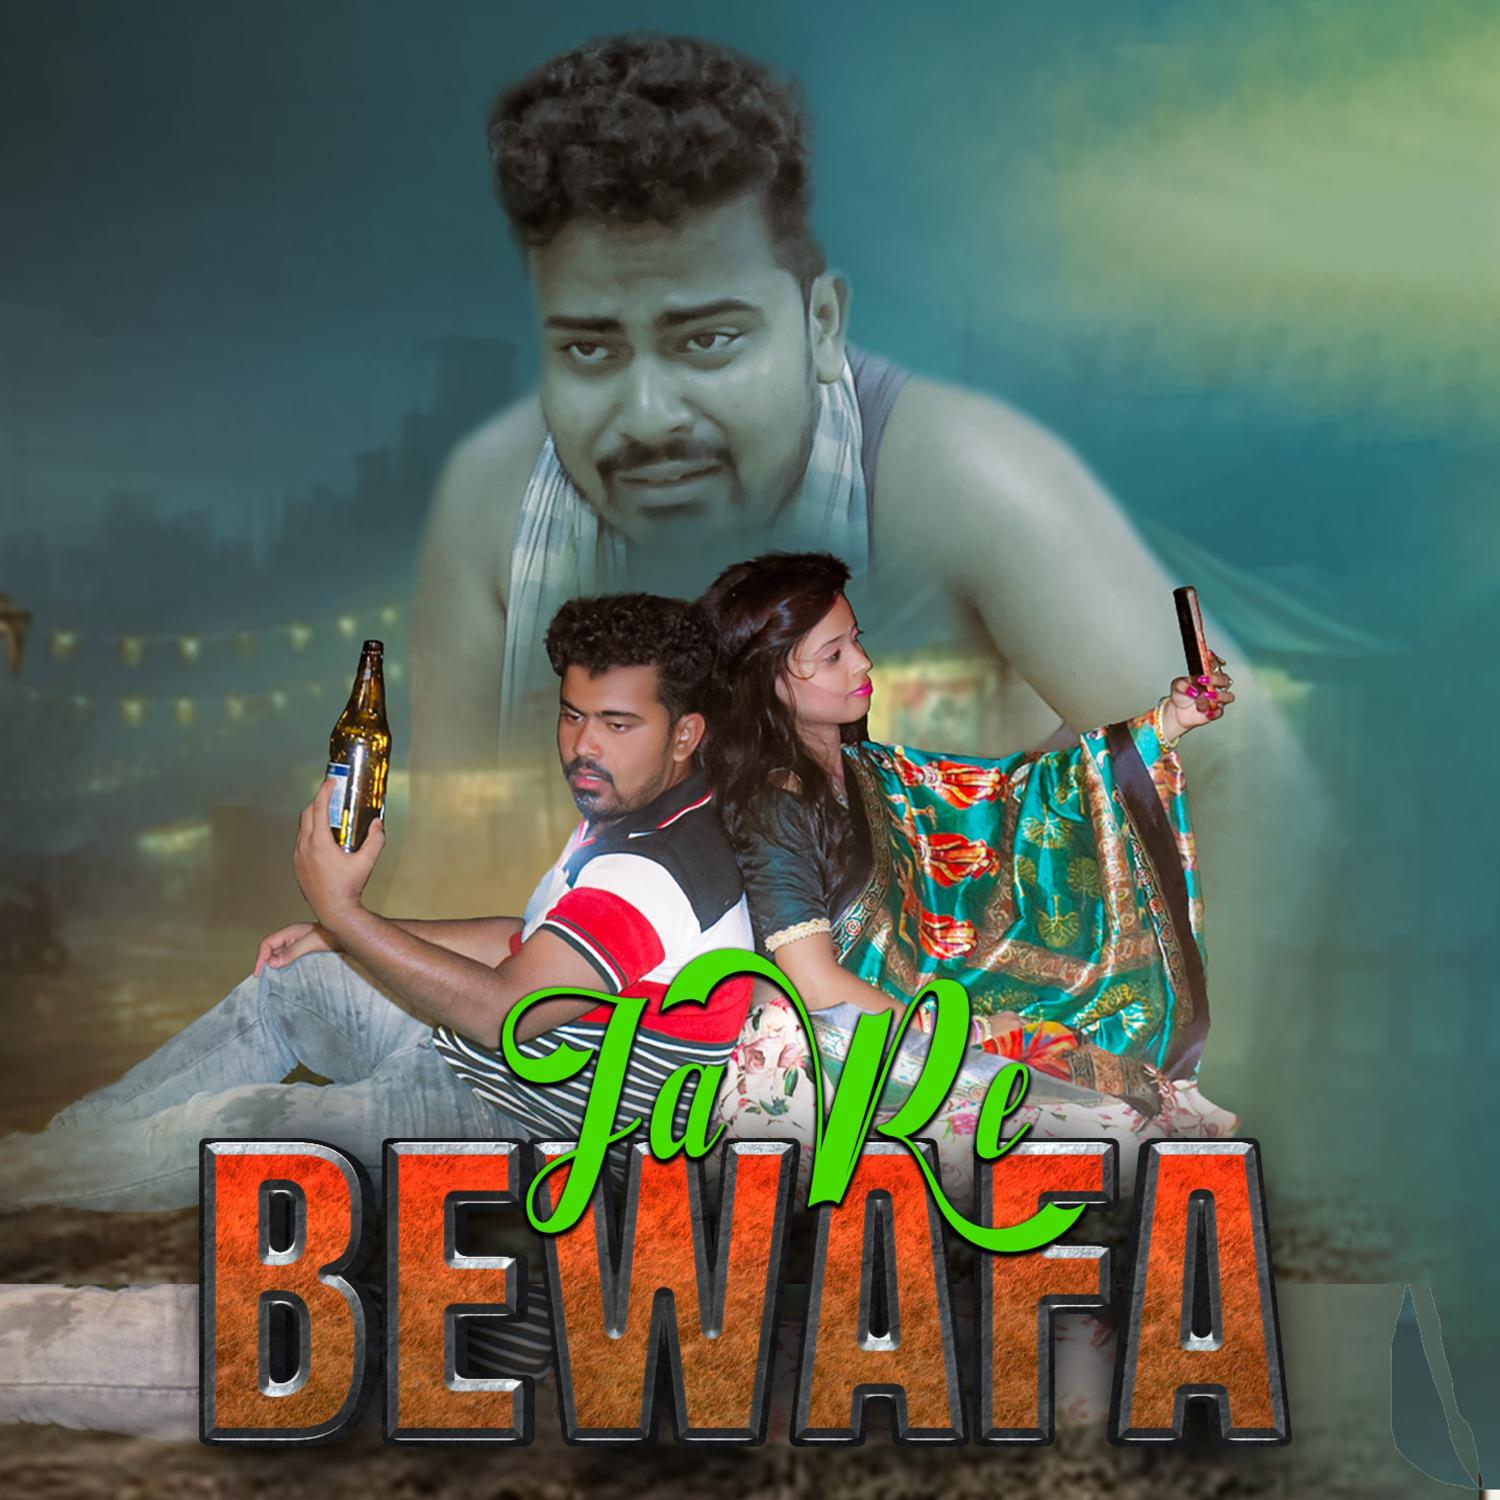 Постер альбома Ja Re Bewafa